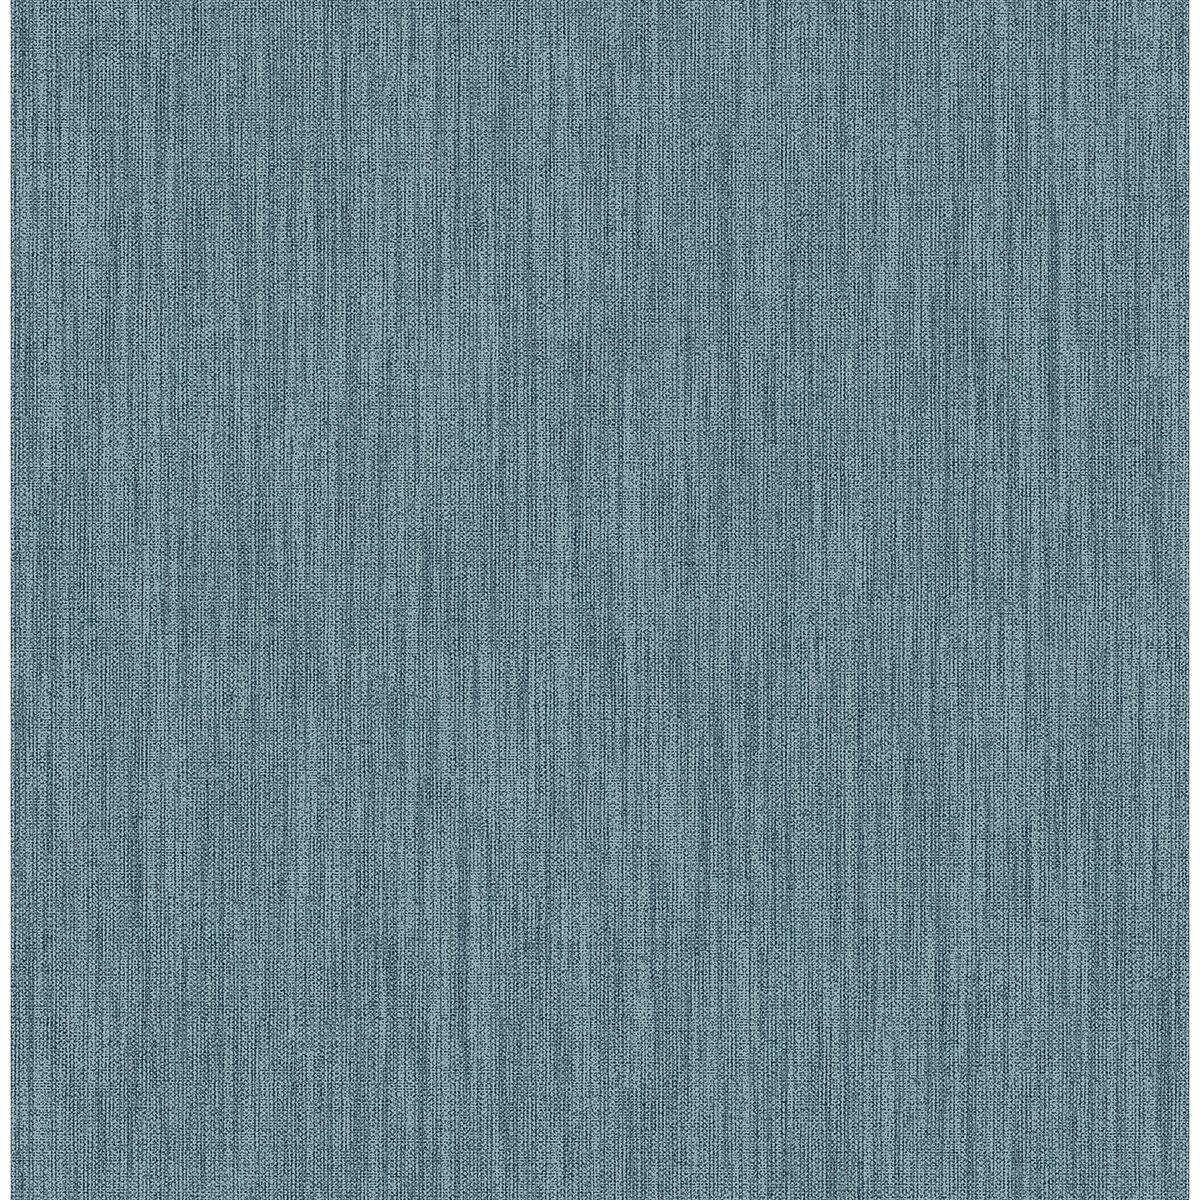 2948-25284 - Chiniile Blue Linen Texture Wallpaper - by A-Street Prints